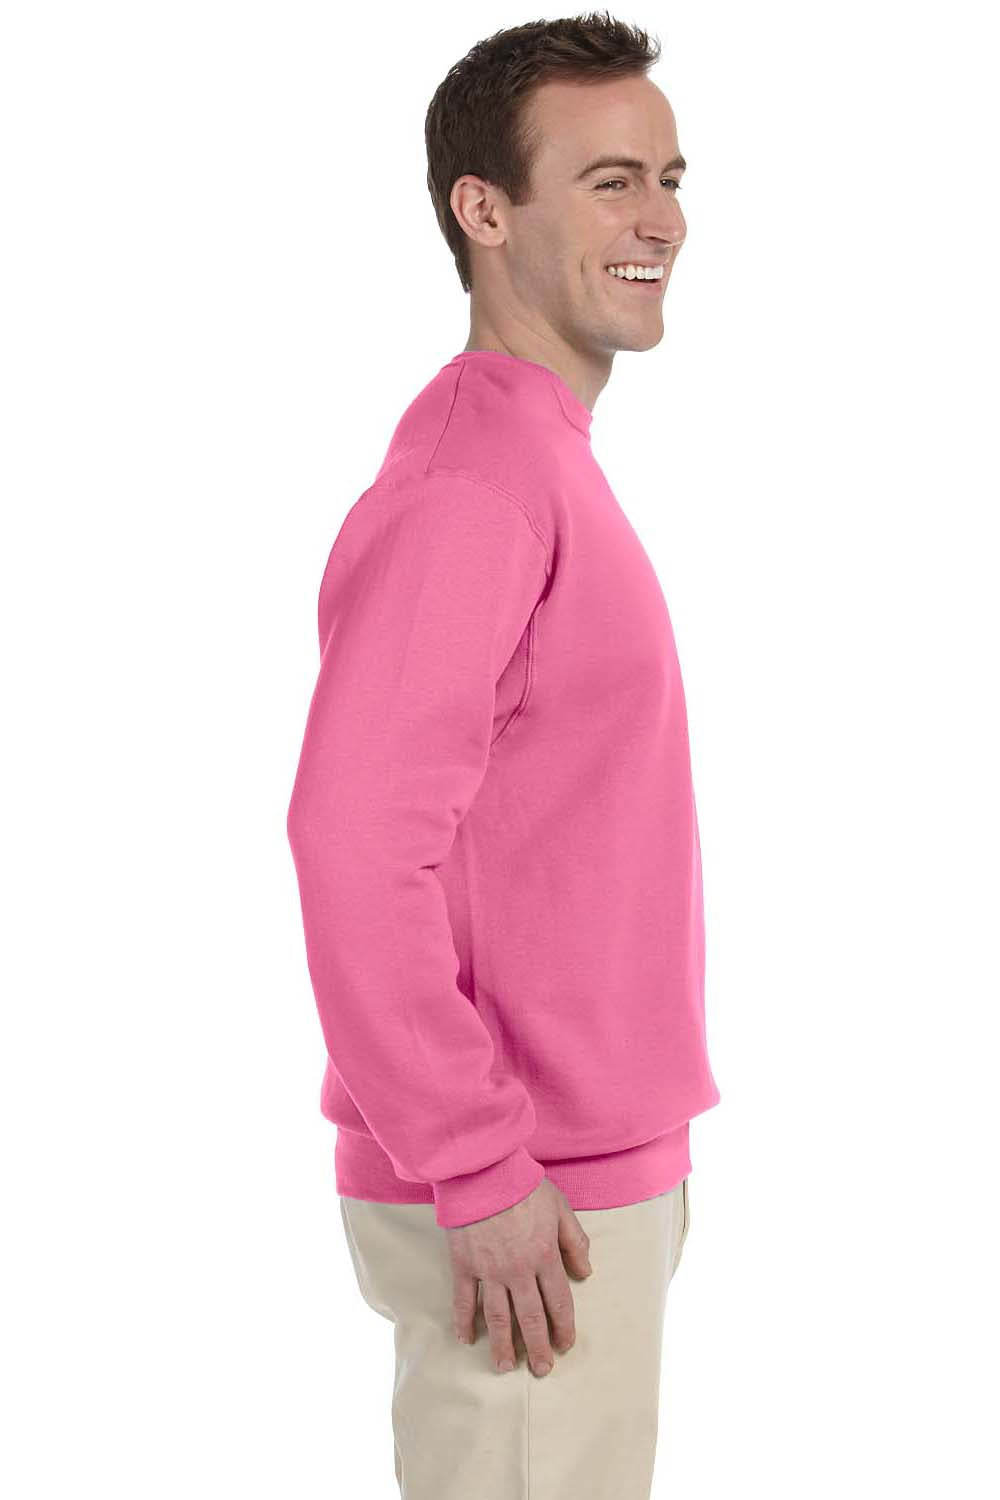 Jerzees 562MR - NuBlend Crewneck Sweatshirt Neon Pink at  Men's  Clothing store: Novelty Athletic Sweatshirts